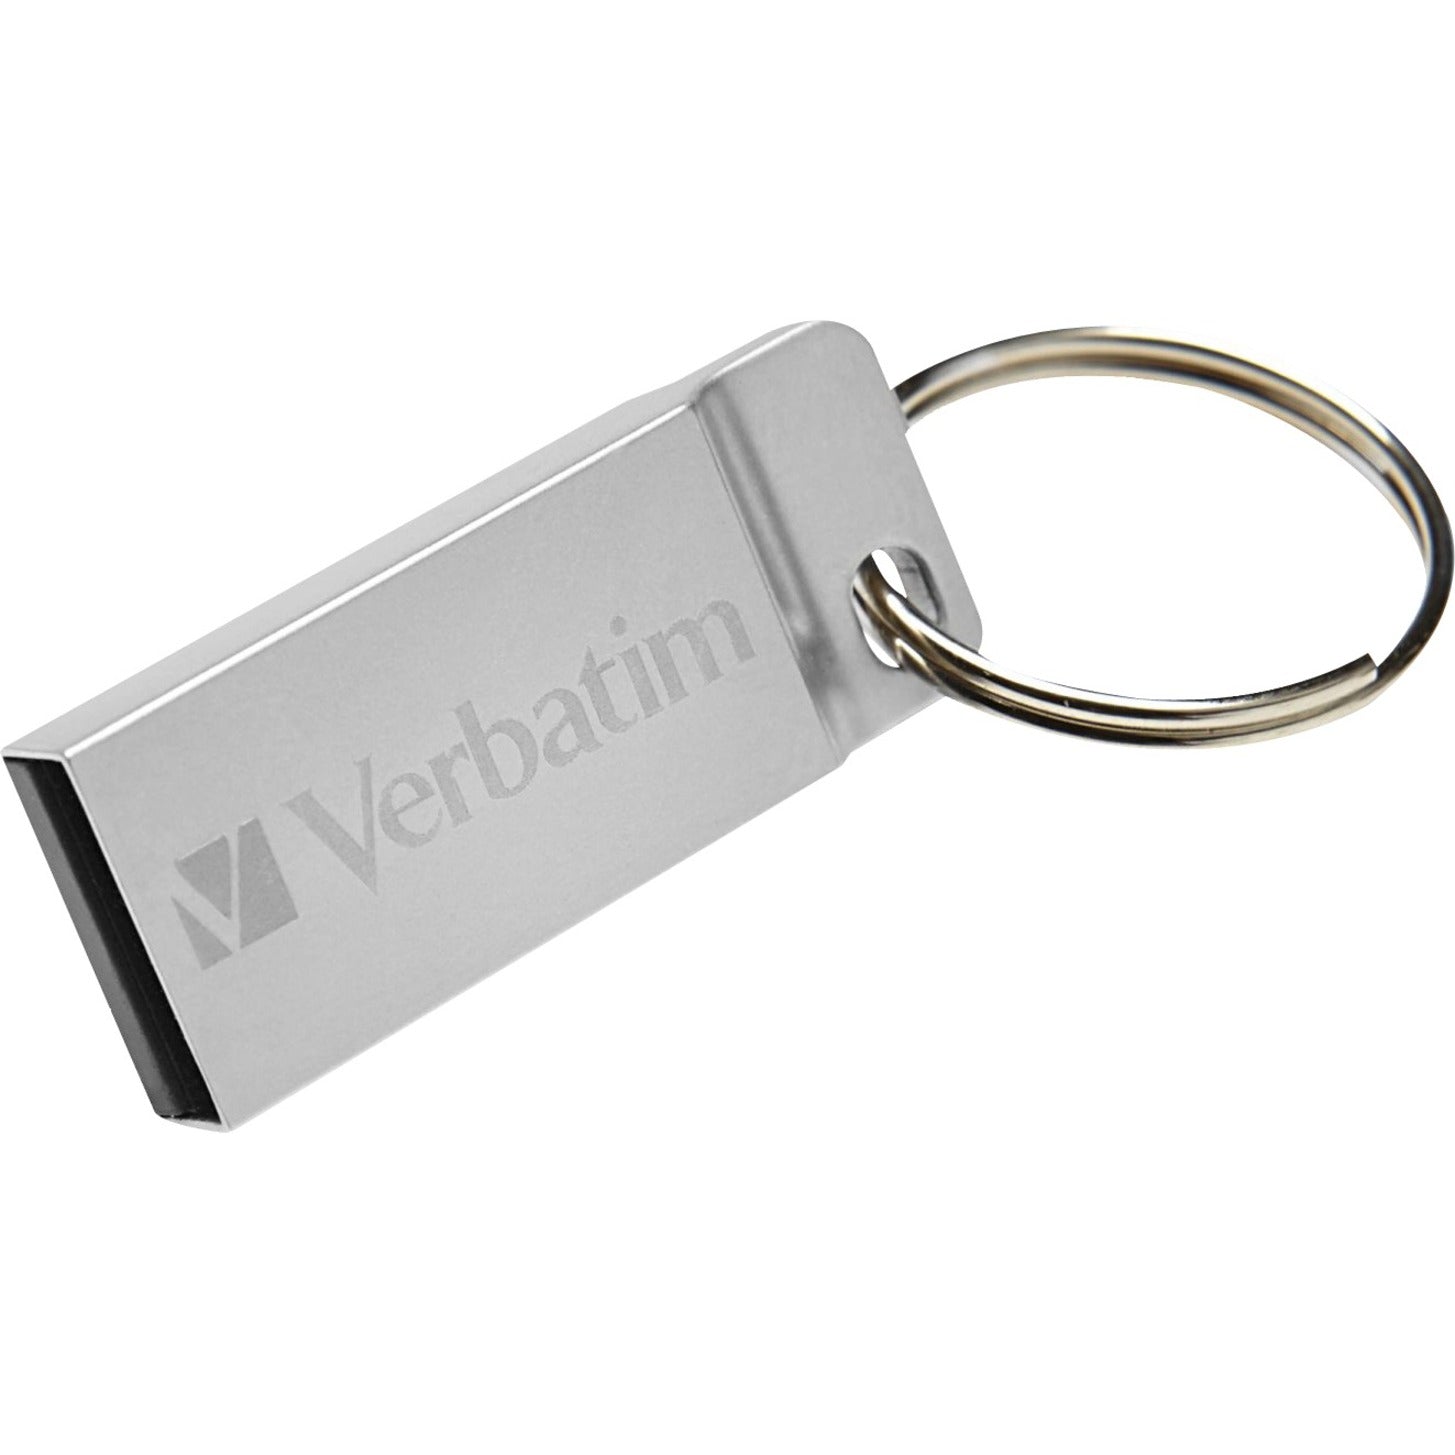 Verbatim 98749 Metal Executive USB Flash Drive - Silver, 32GB Water Resistant